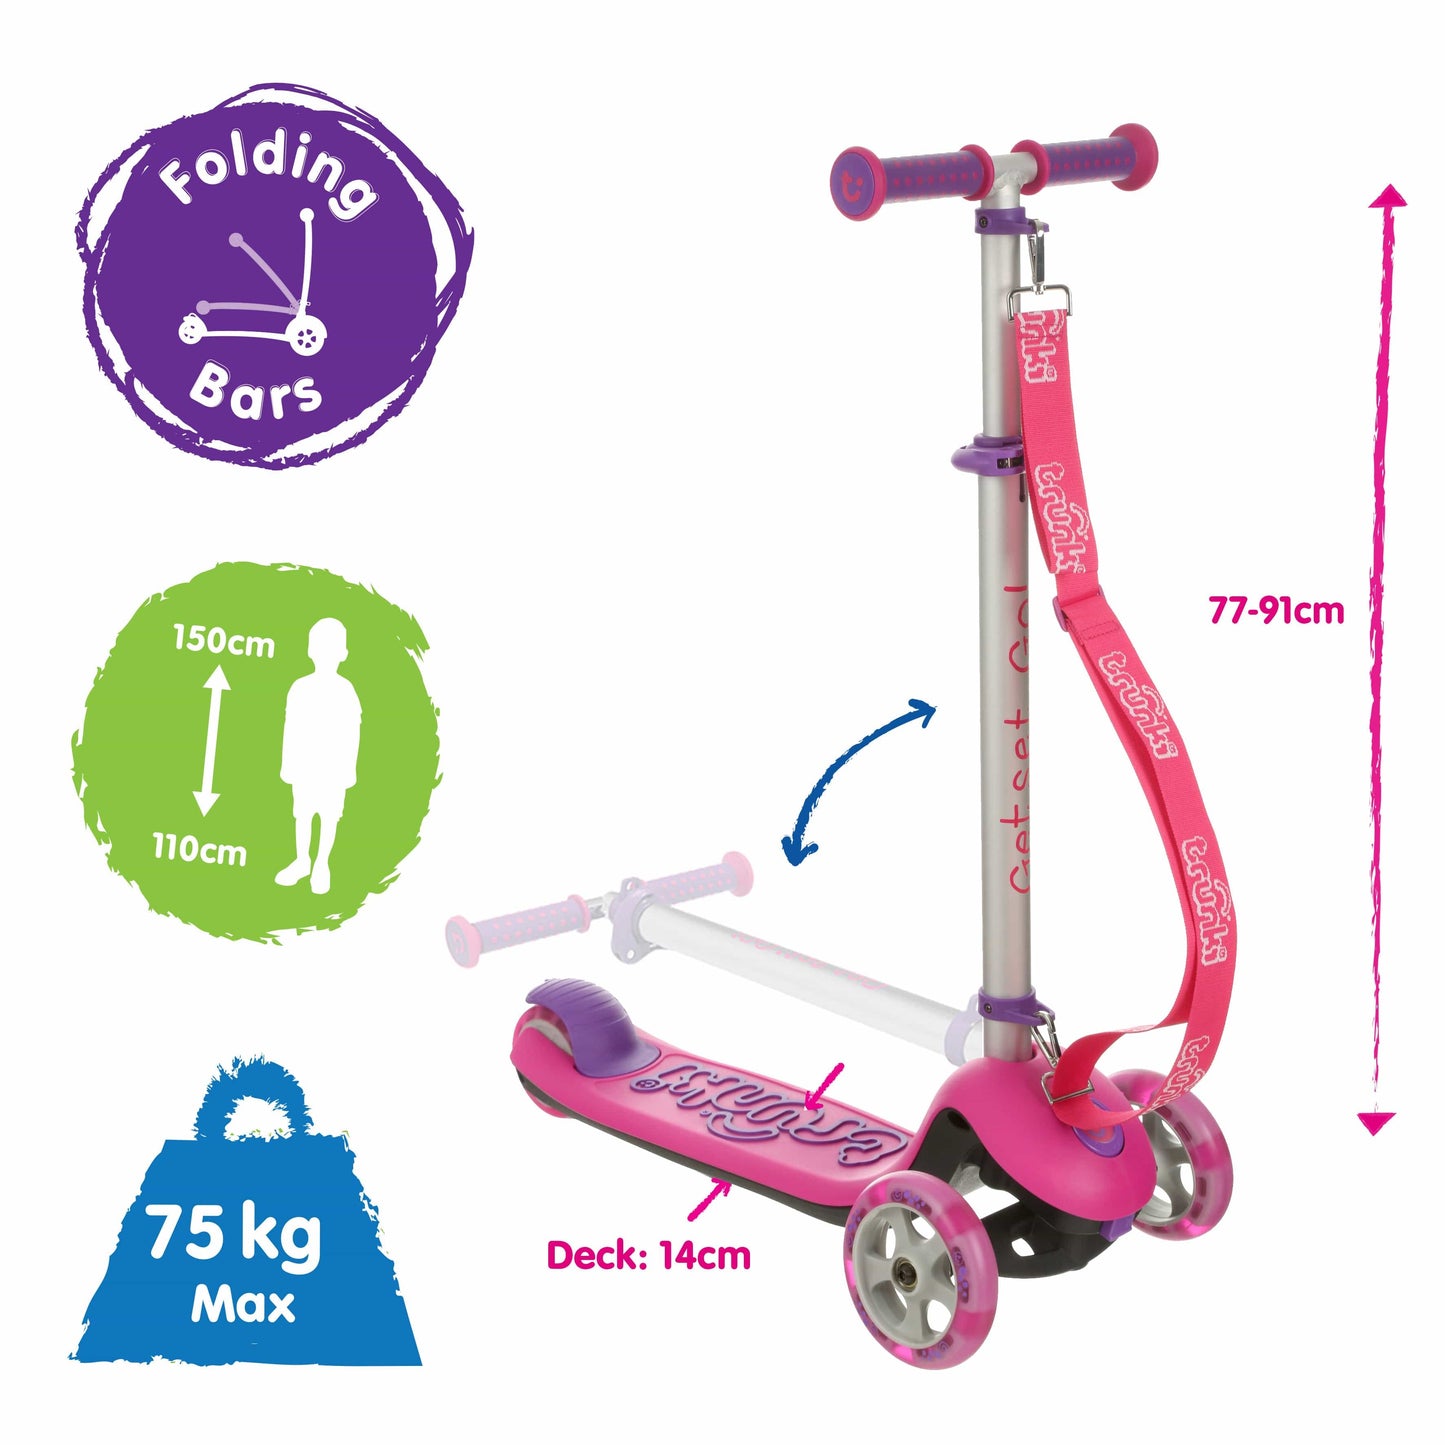 Trunki Folding Scooter - Large - Pink